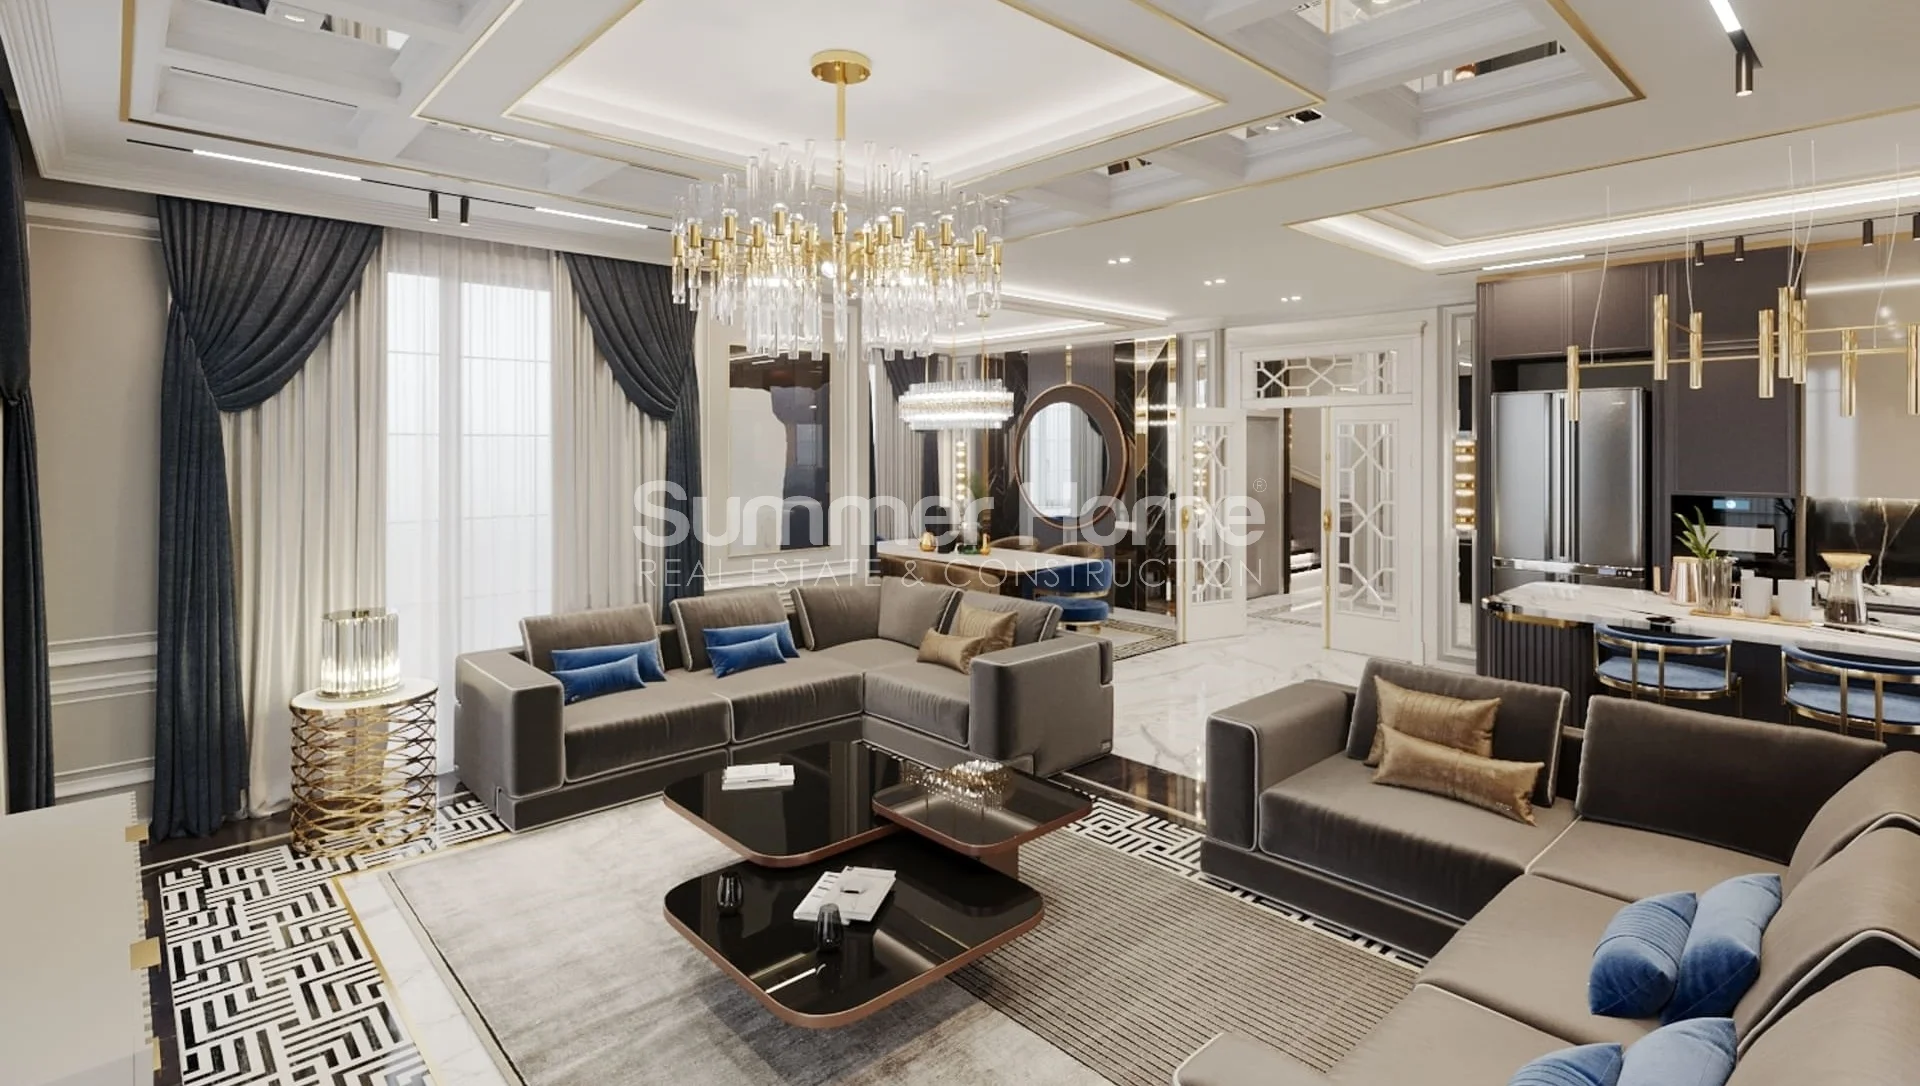 Luxury Five-Bedroomed Villa set in Stunning Kargicak Interior - 5